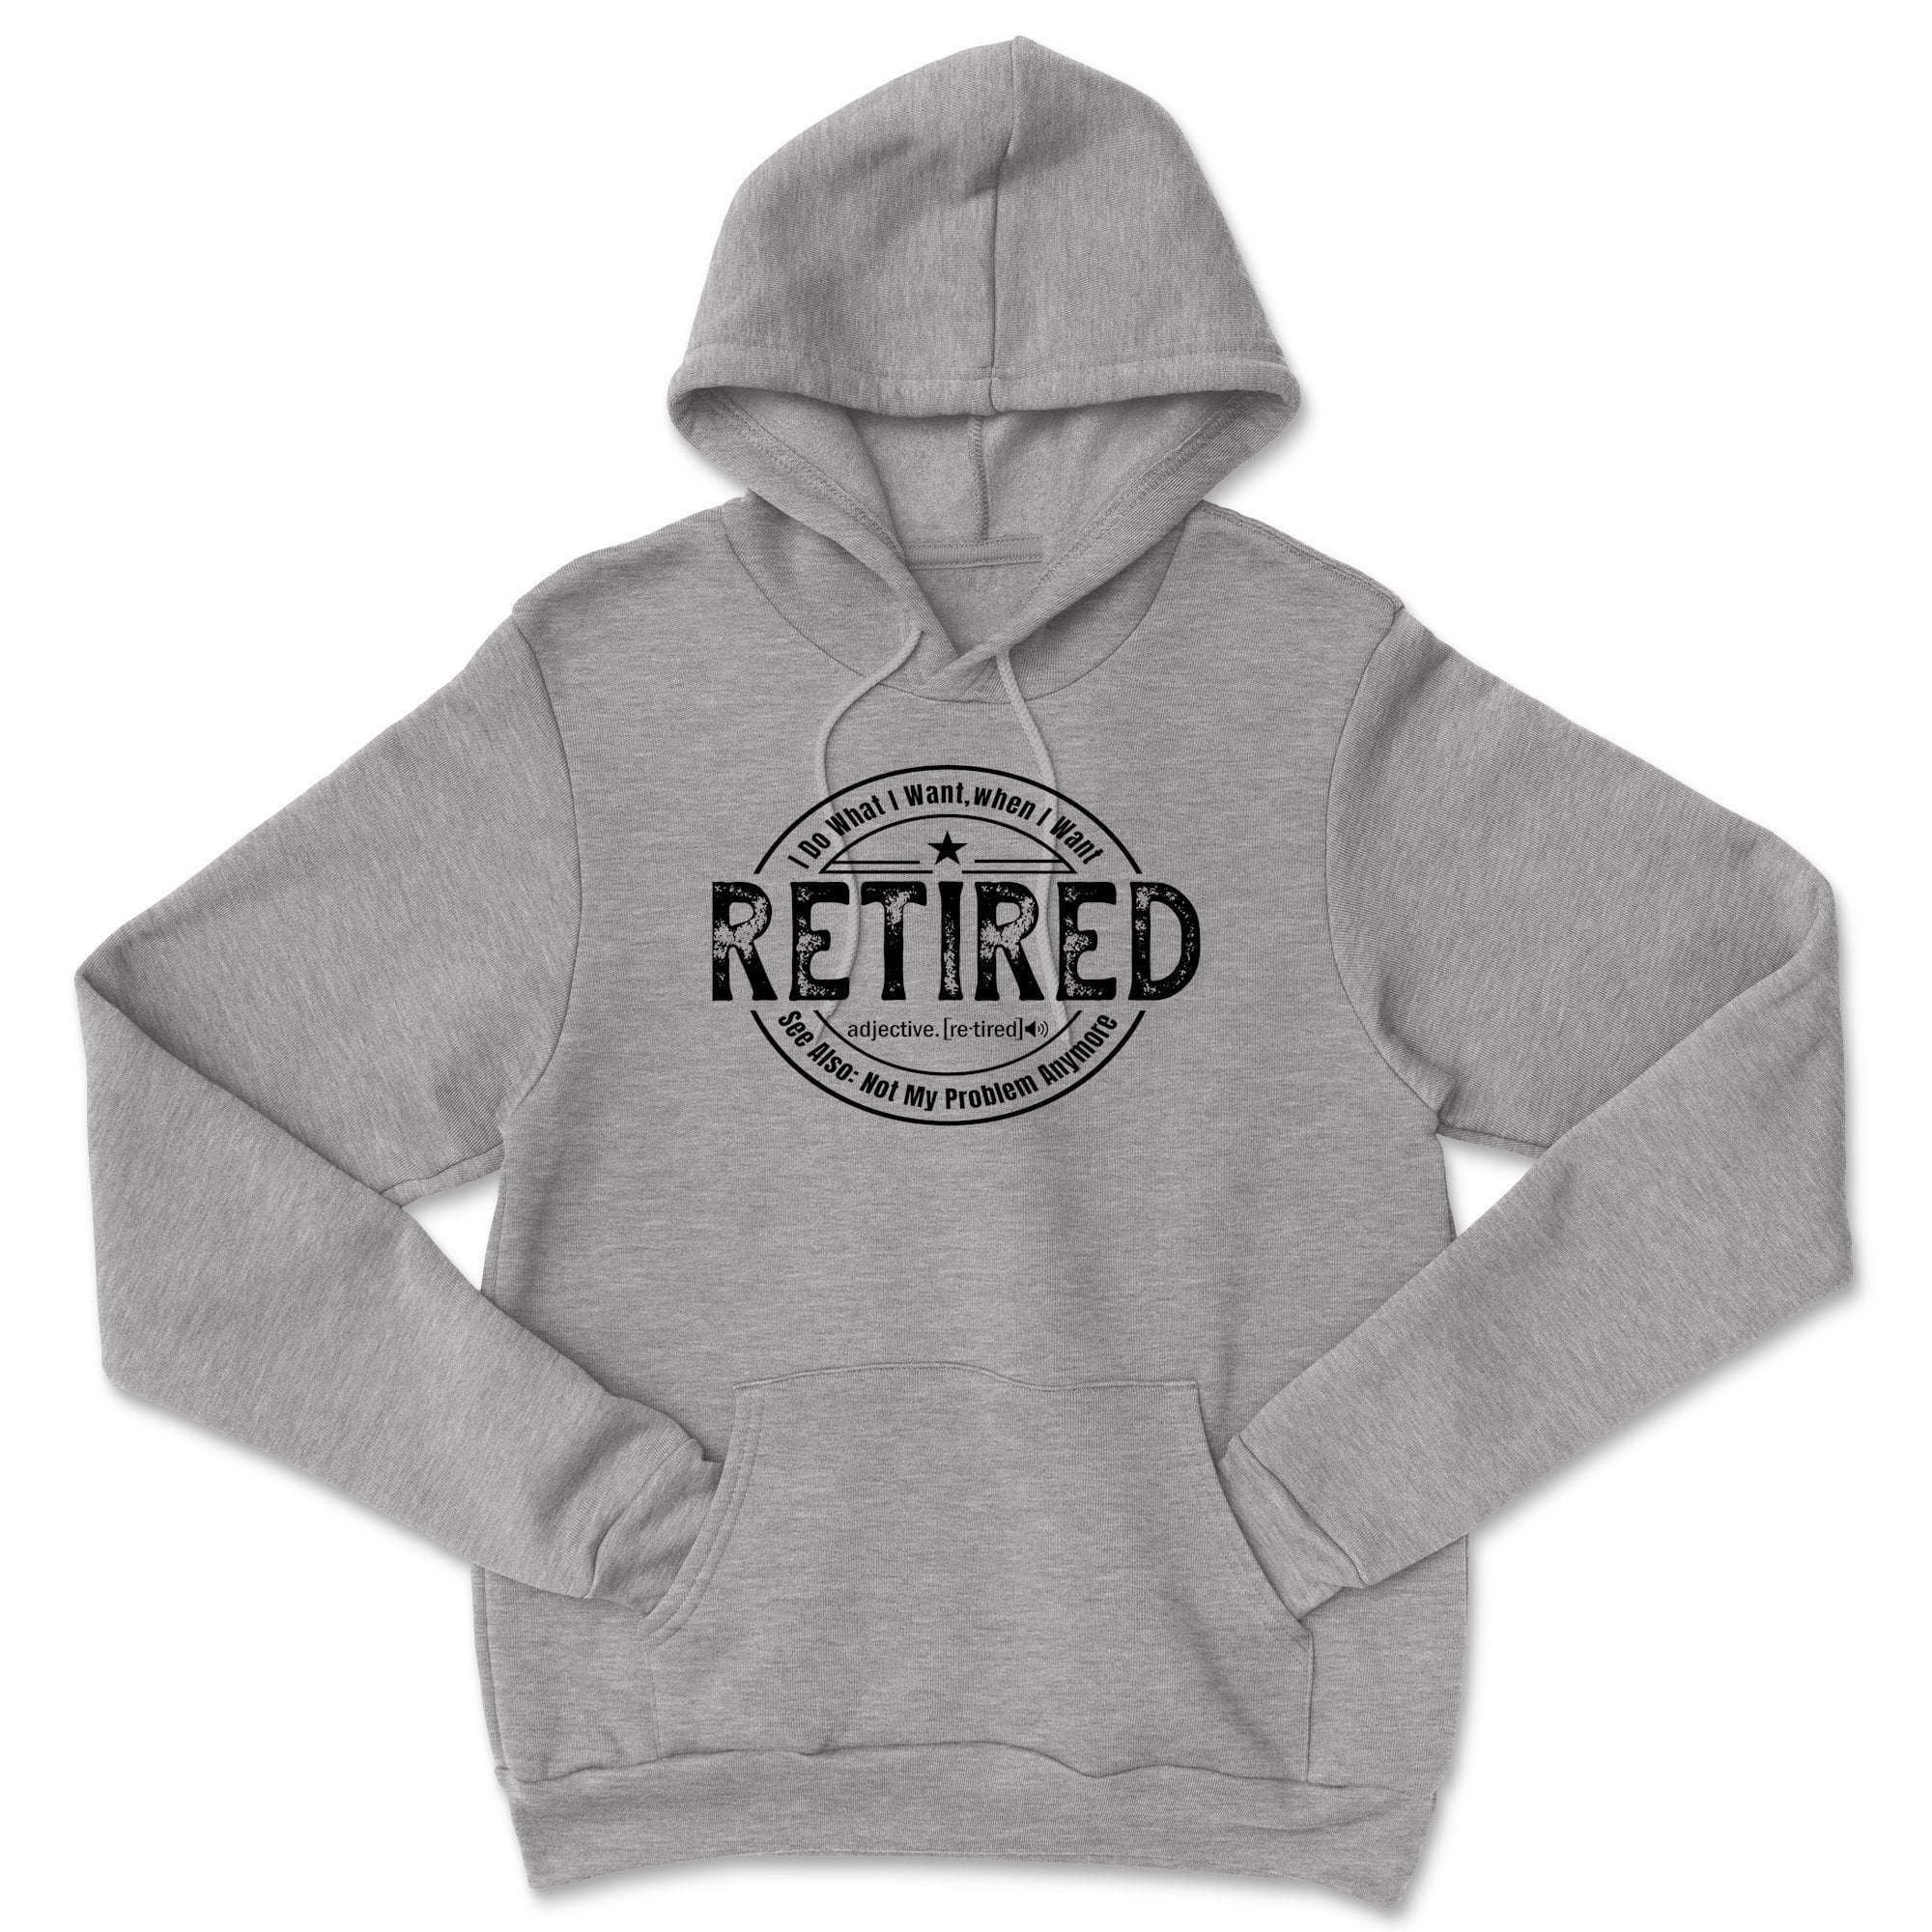 Retired Hoodie for Men Women Retired Not My Problem Anymore Hooded Sweatshirt